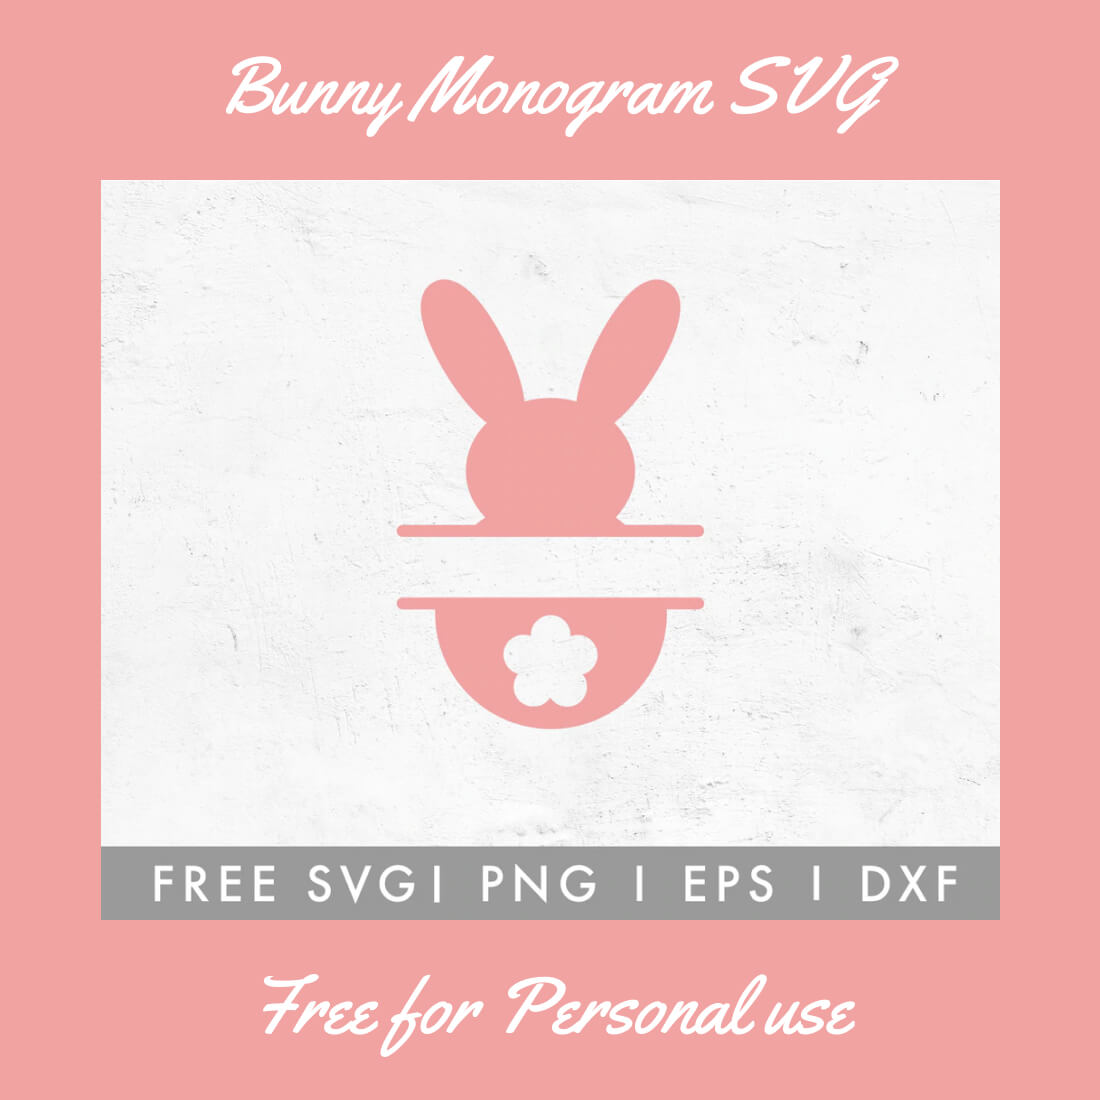 FREE Bunny Monogram SVG.